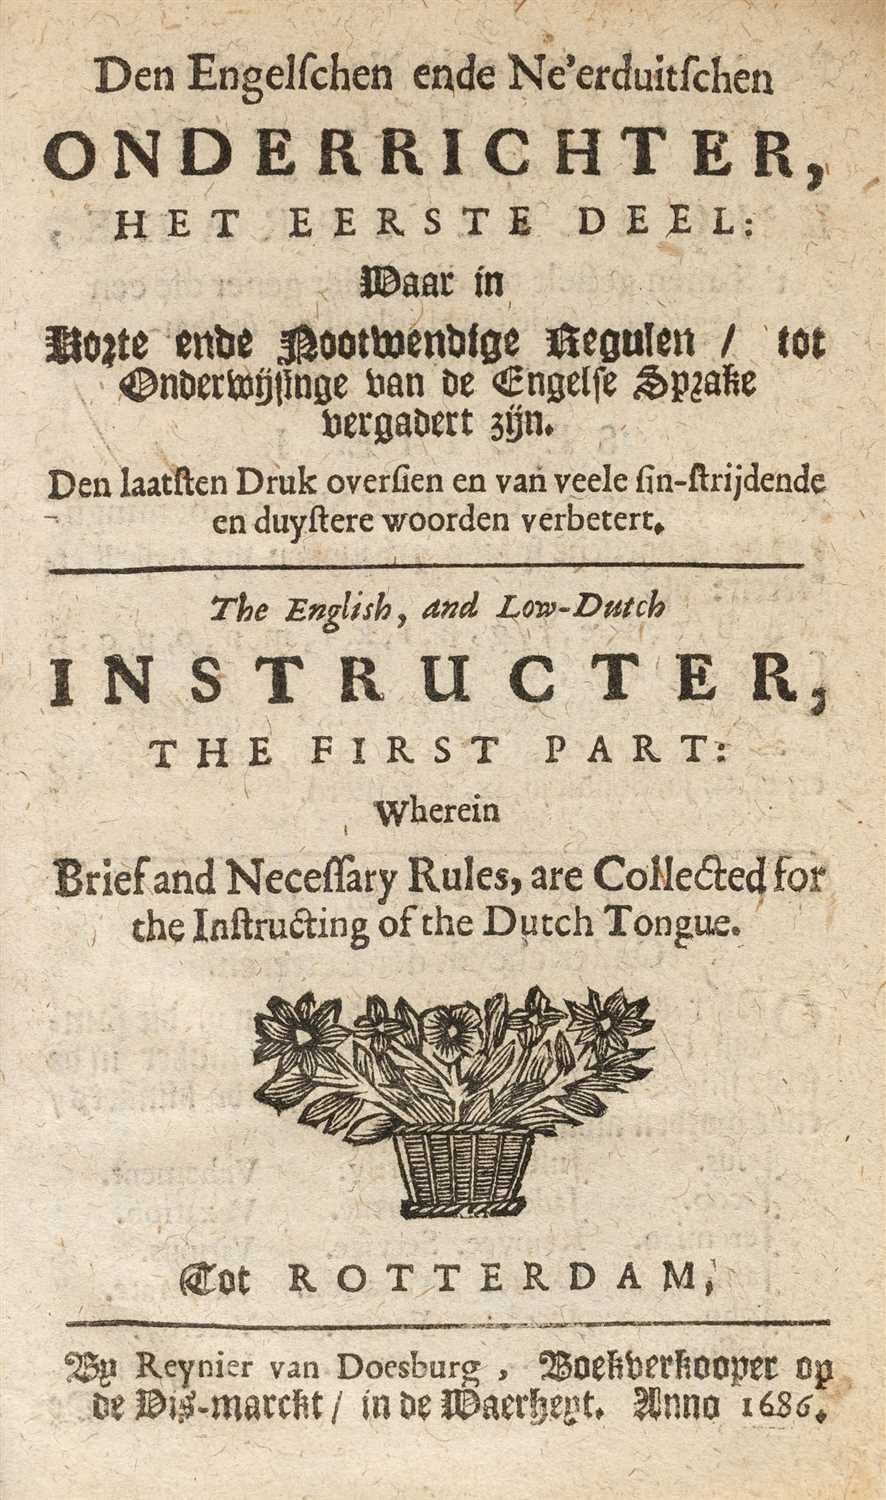 Lot 84 - Hillenius (François). The English, and Low-Dutch Instructer, 1686